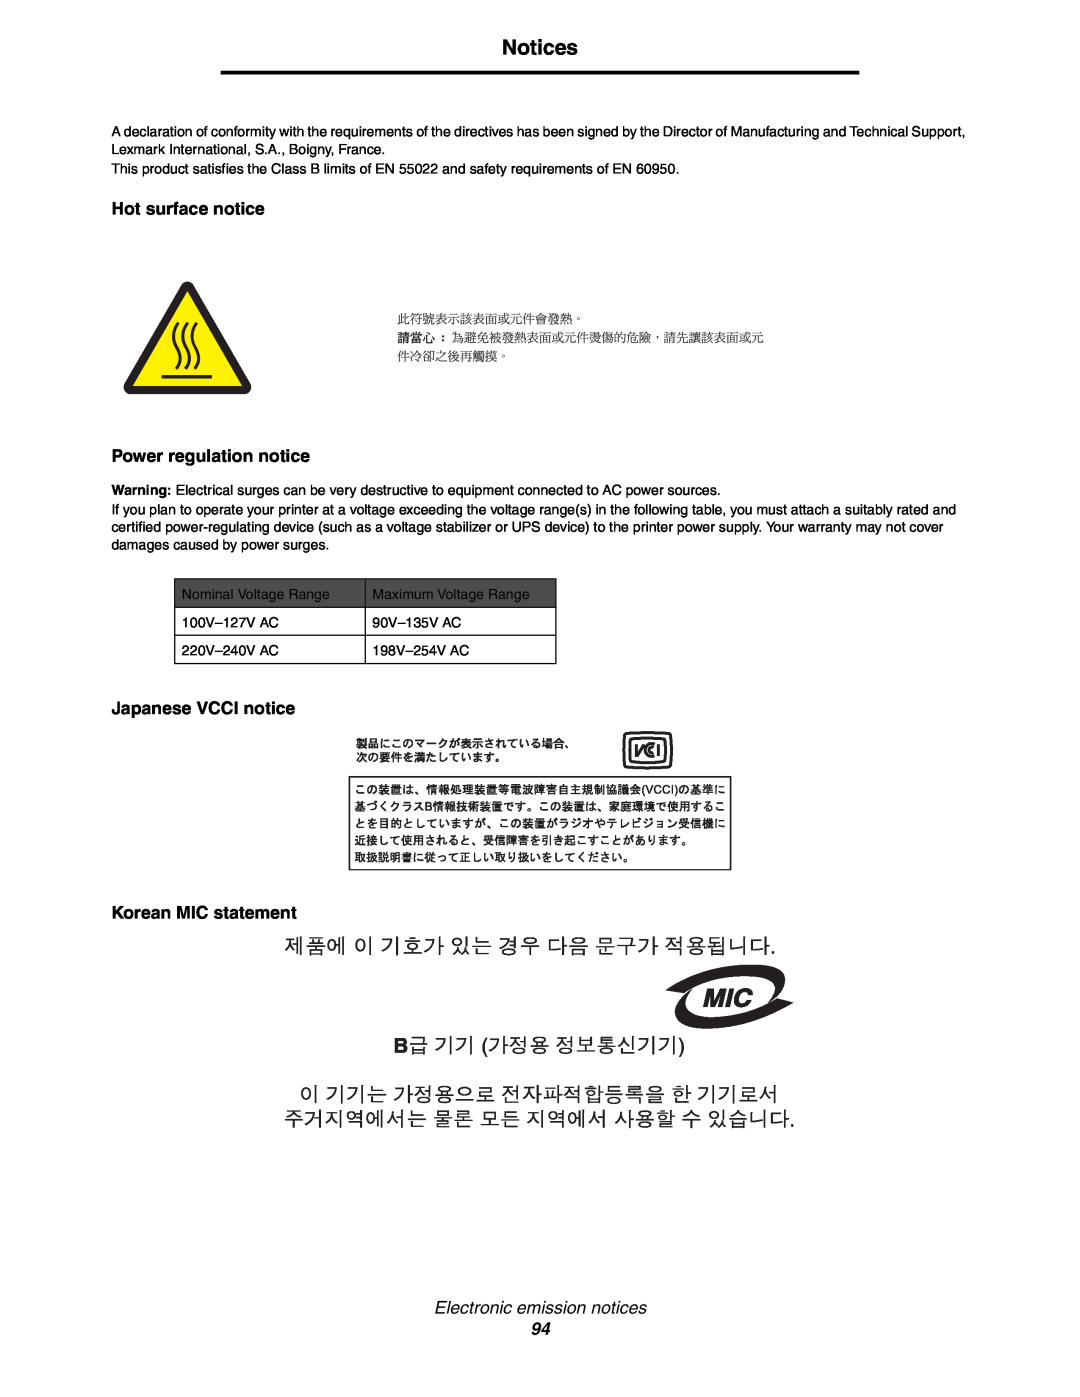 Lexmark 250dn manual Notices, Hot surface notice Power regulation notice, Japanese VCCI notice Korean MIC statement 